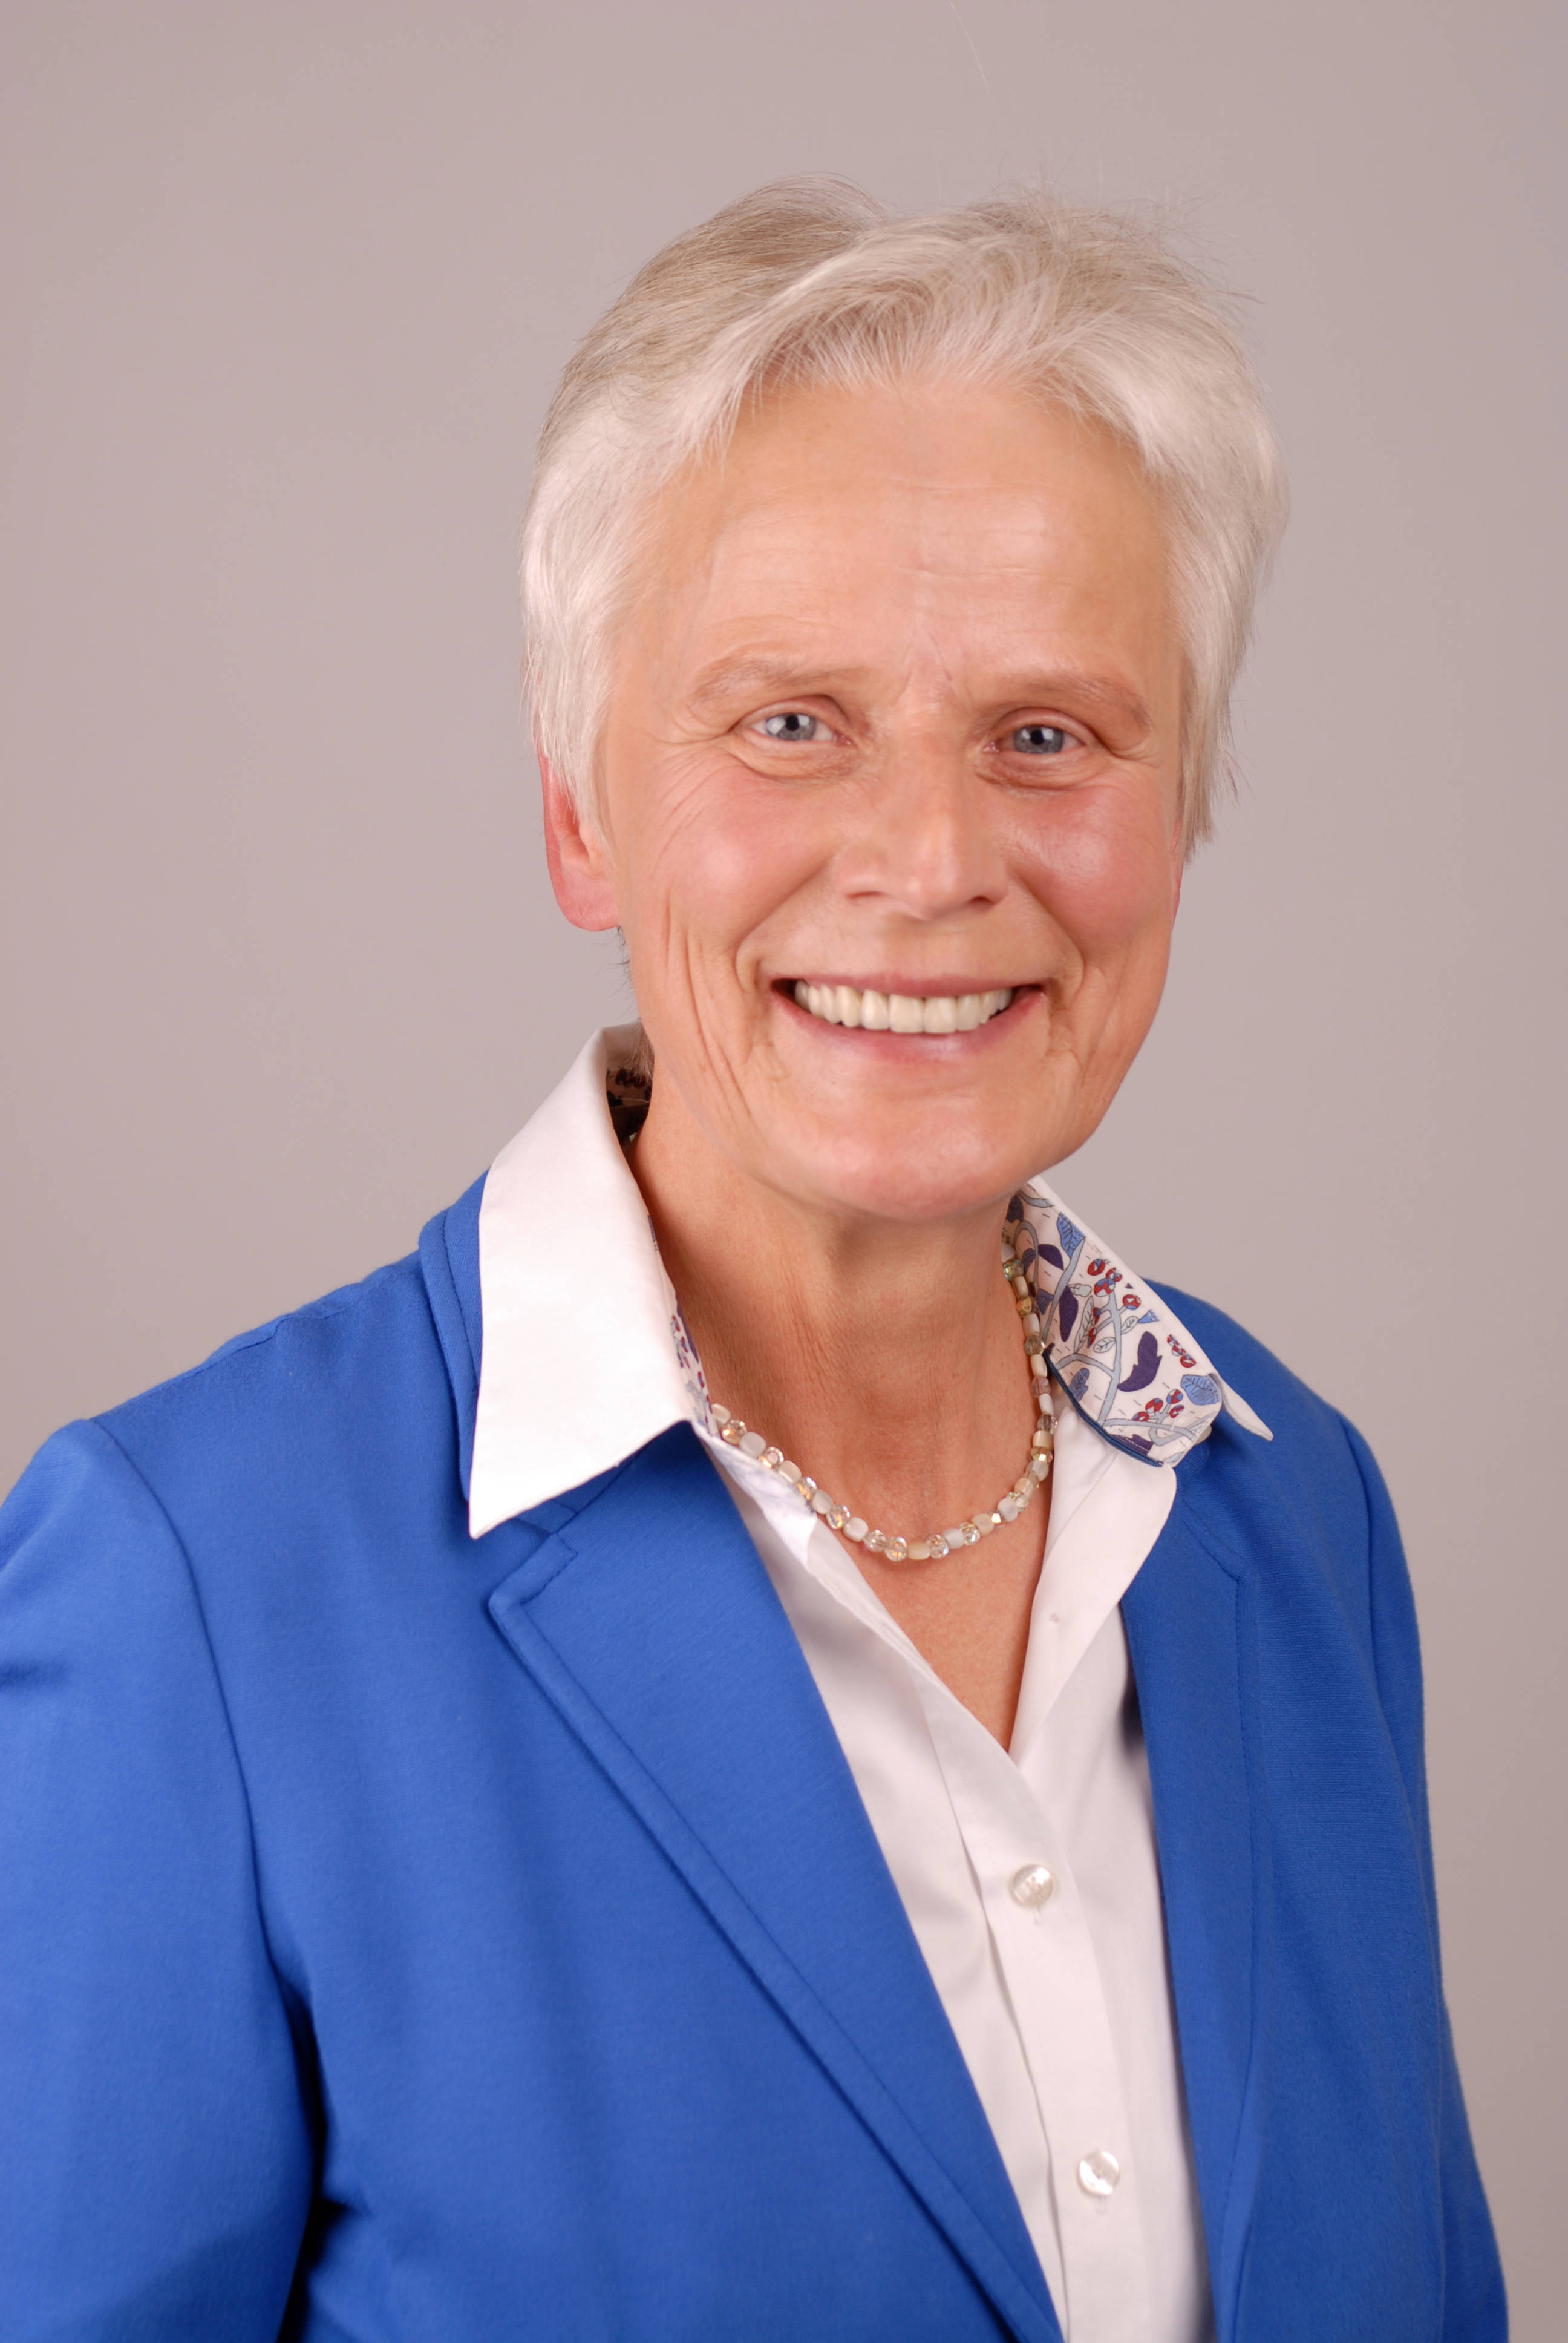 Klein-Heßling, Elisabeth (CDU)